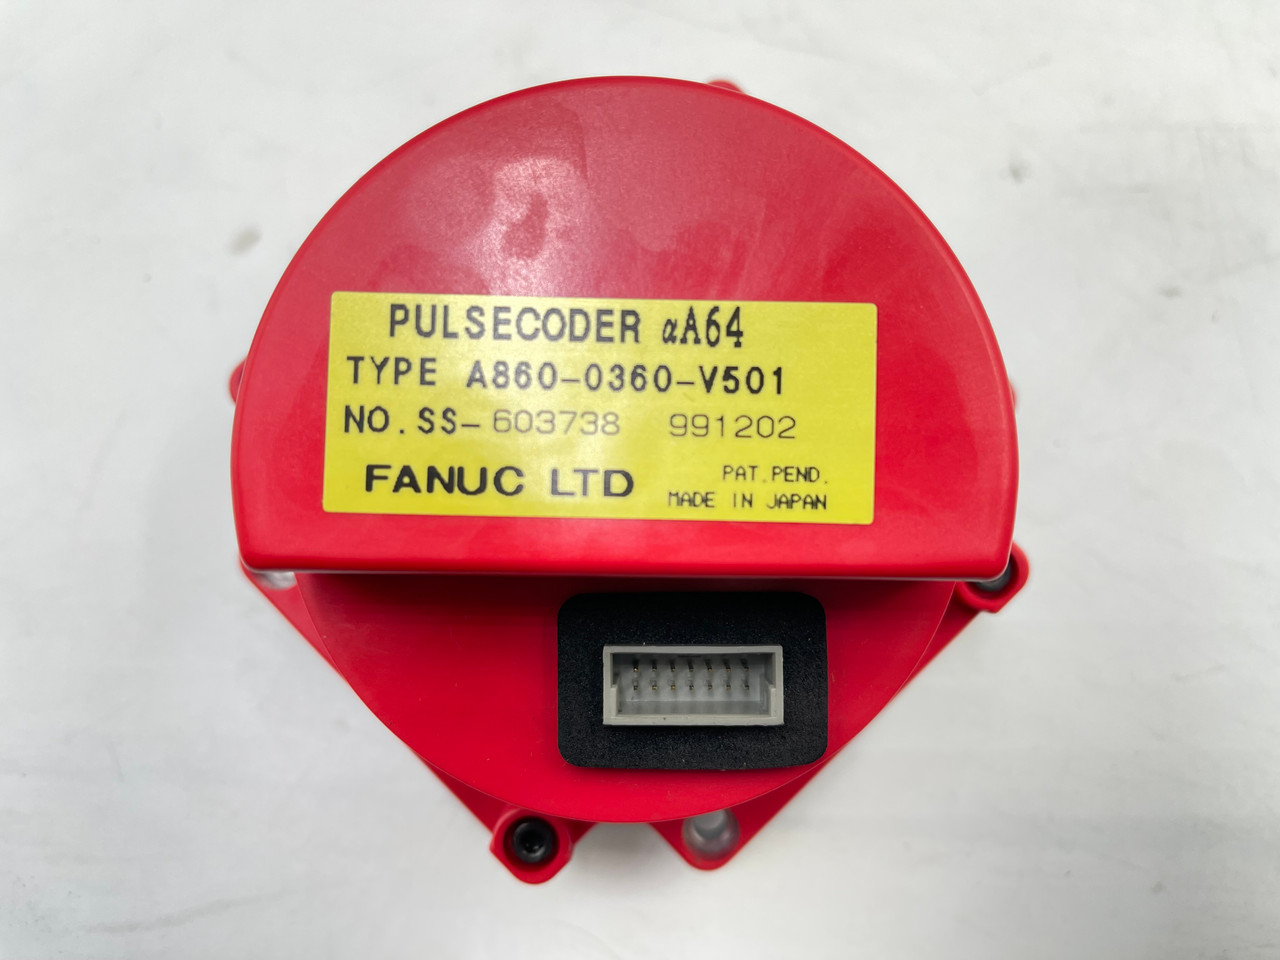 FANUC A860-0360-V501 PULSECODER αA64 ROTARY ENCODER - NEW